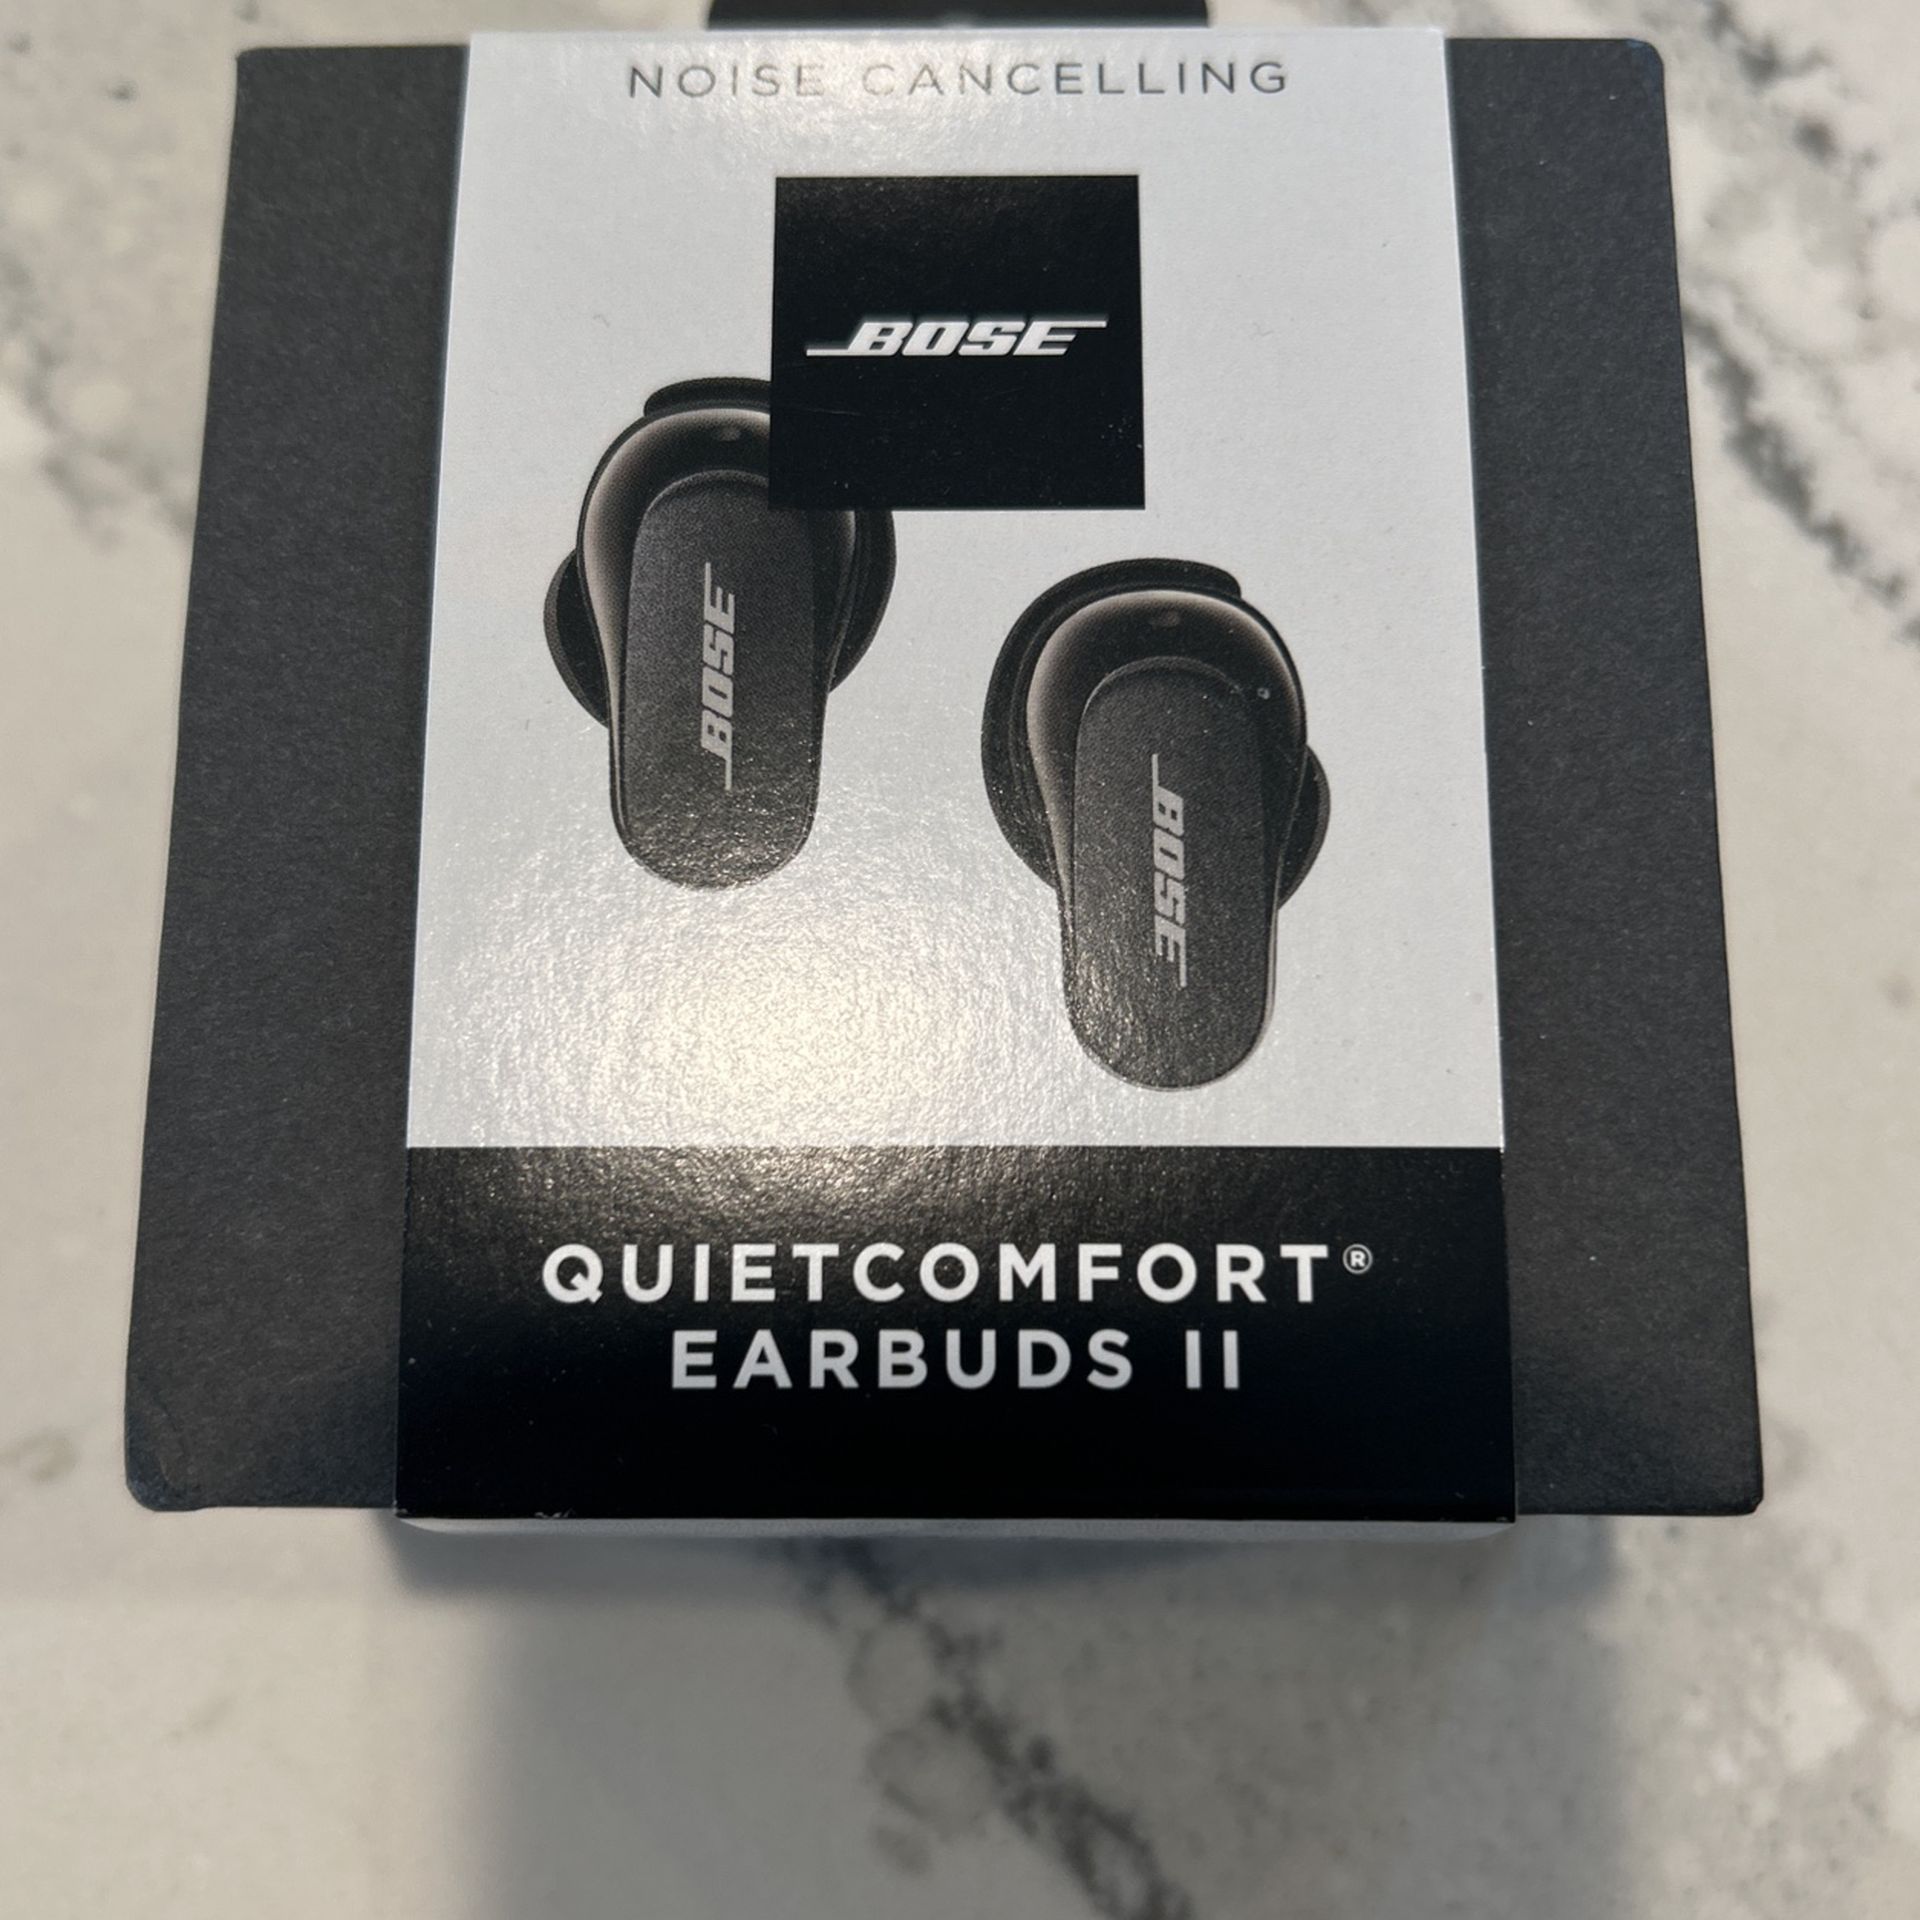 Bose Quietcomfort Earbuds II- Noise Canceling